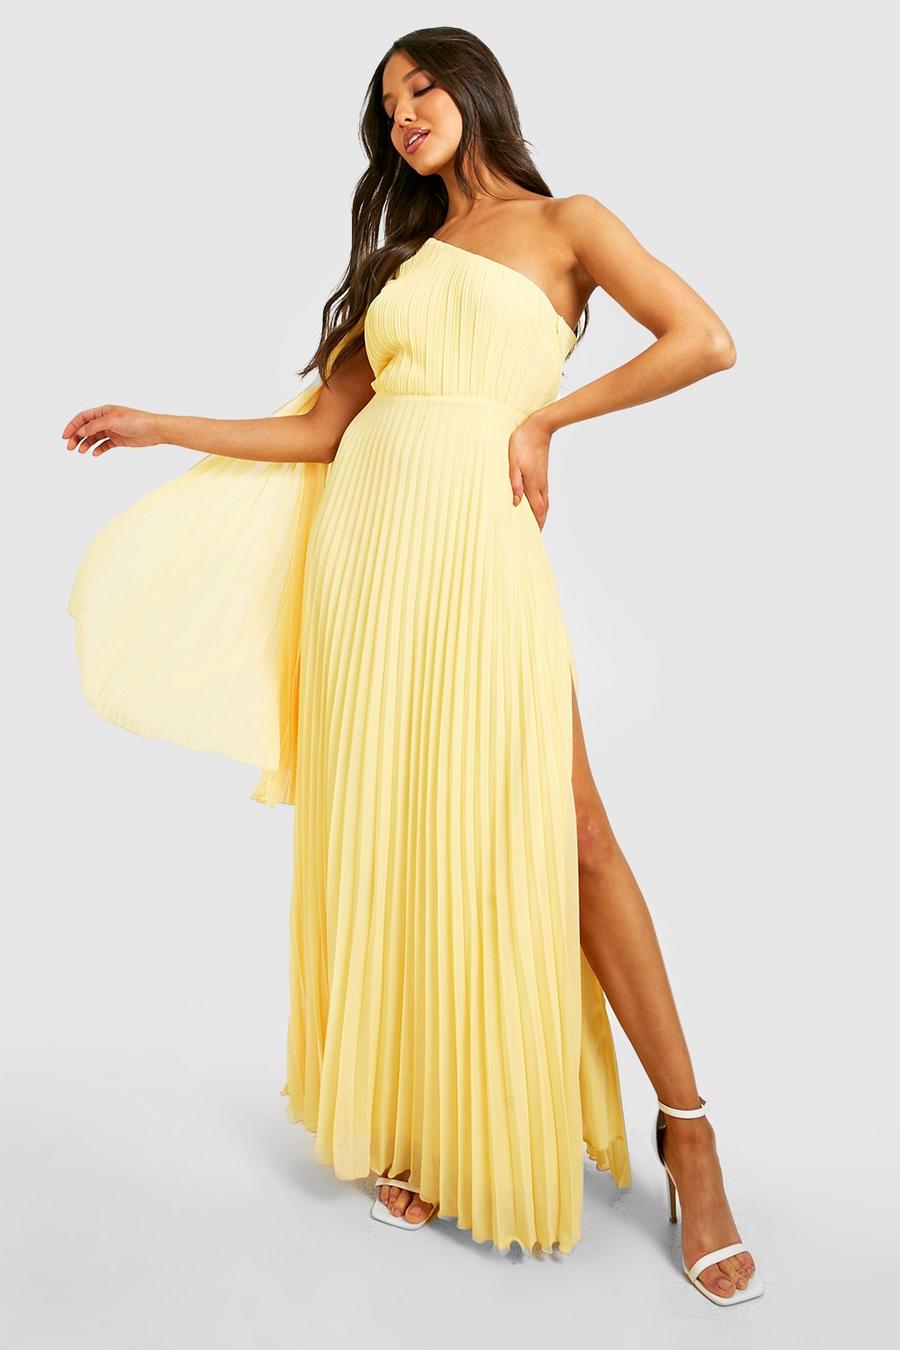 Lemon yellow Pleated Chiffon Asymmetric Maxi Dress